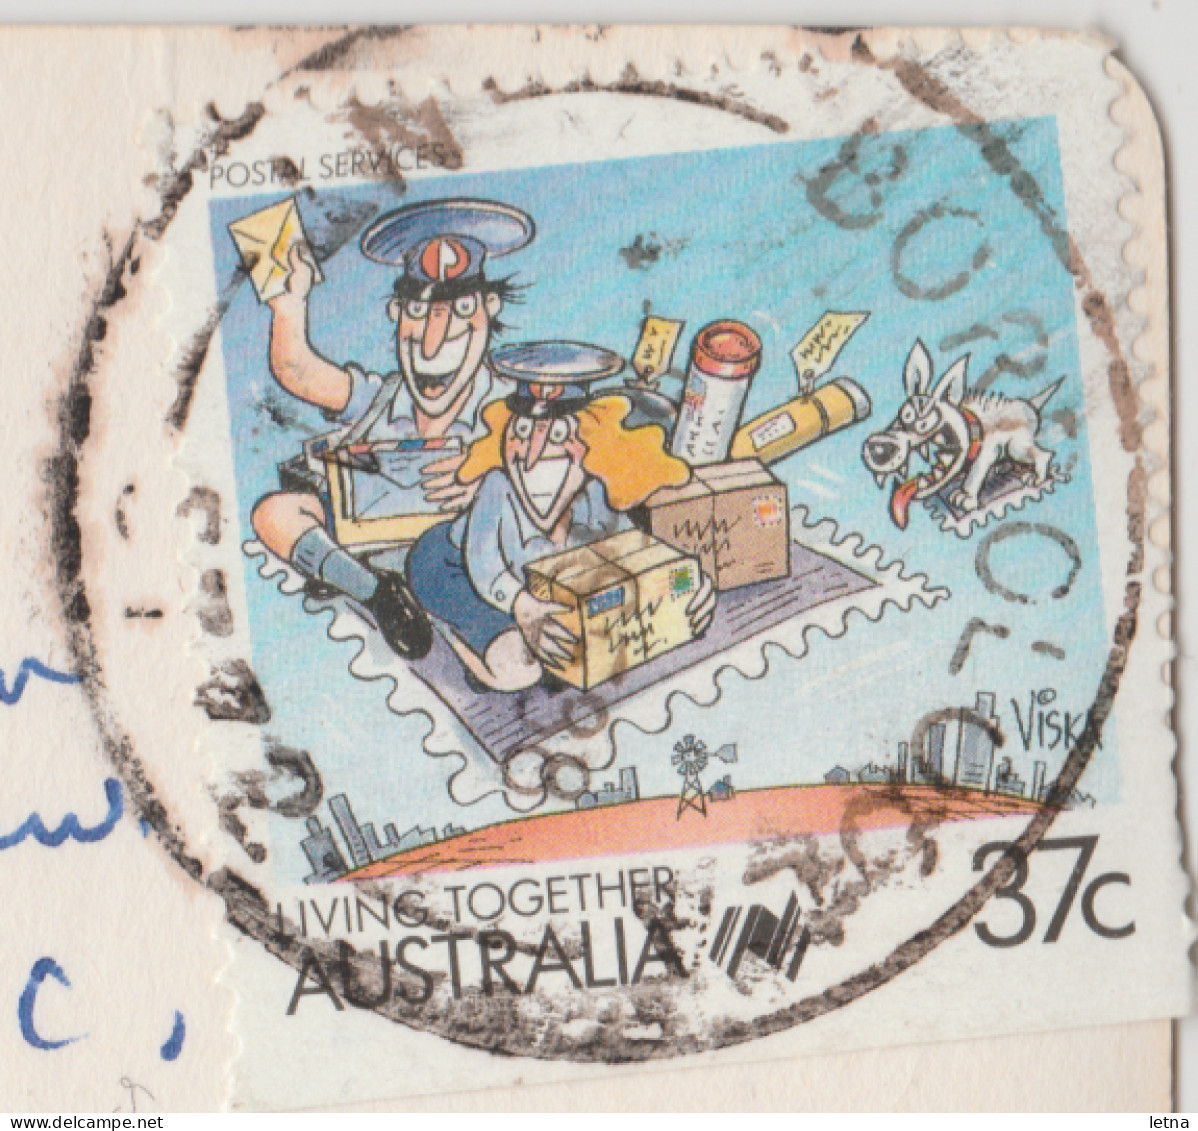 Australia QUEENSLAND QLD Frilled Lizard CARDWELL ZOO Murray Views W551 Postcard C1980s 37c Stamp - Far North Queensland